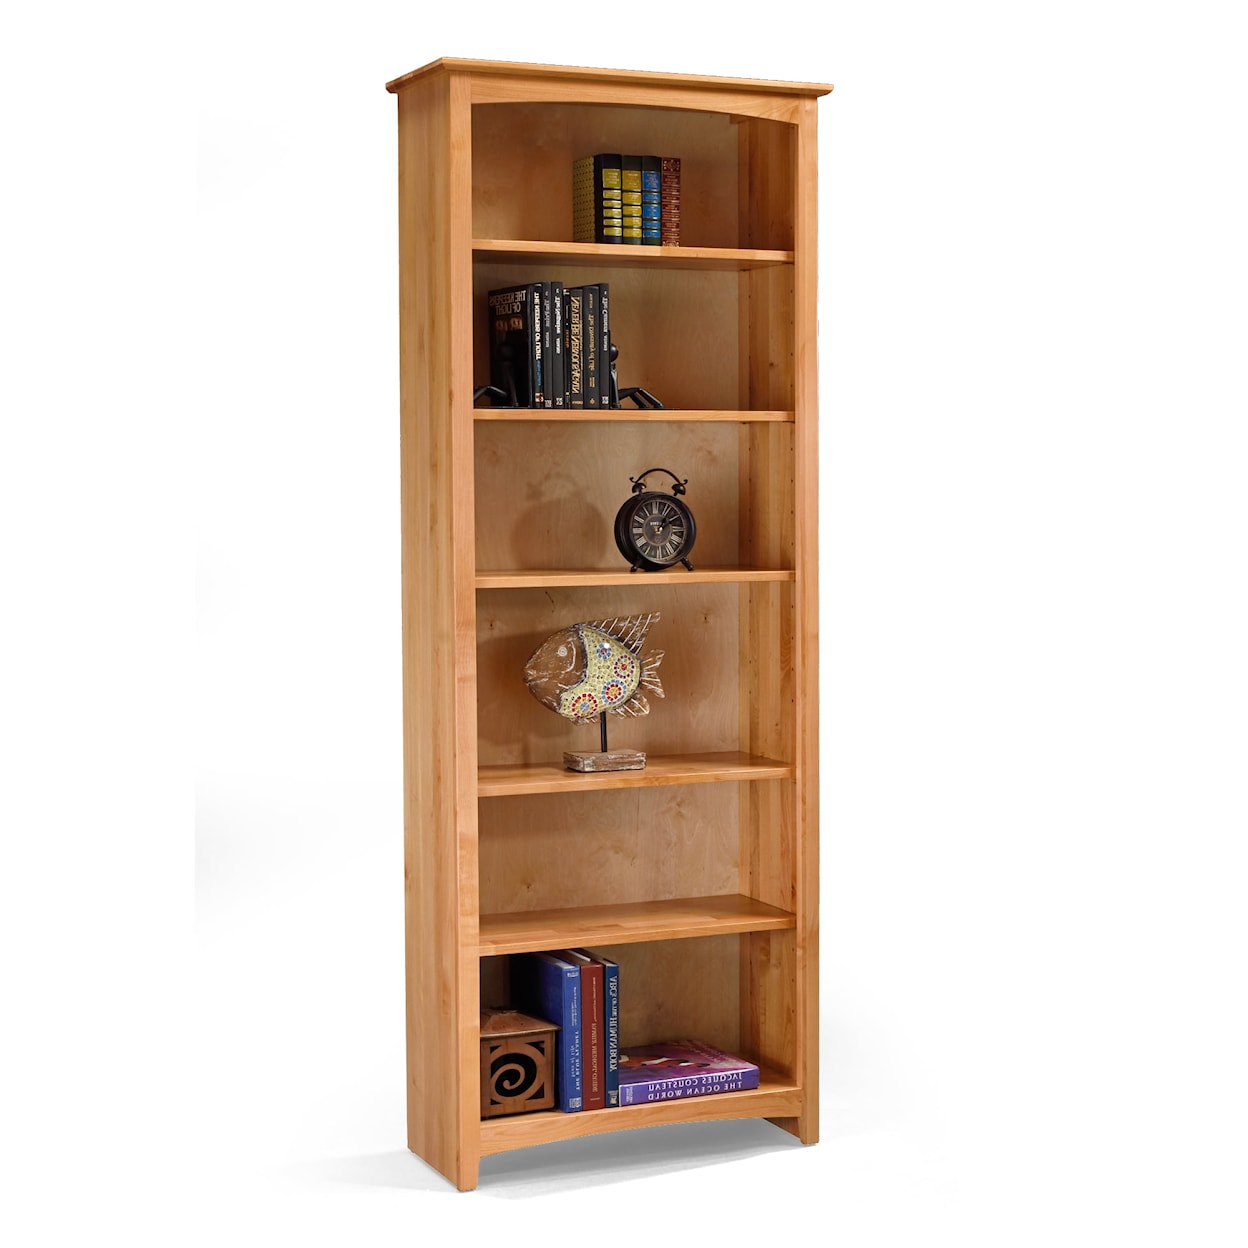 Archbold Furniture Alder Bookcases 63084 N Solid Wood Alder Bookcase With 5 Open Shelves Simon